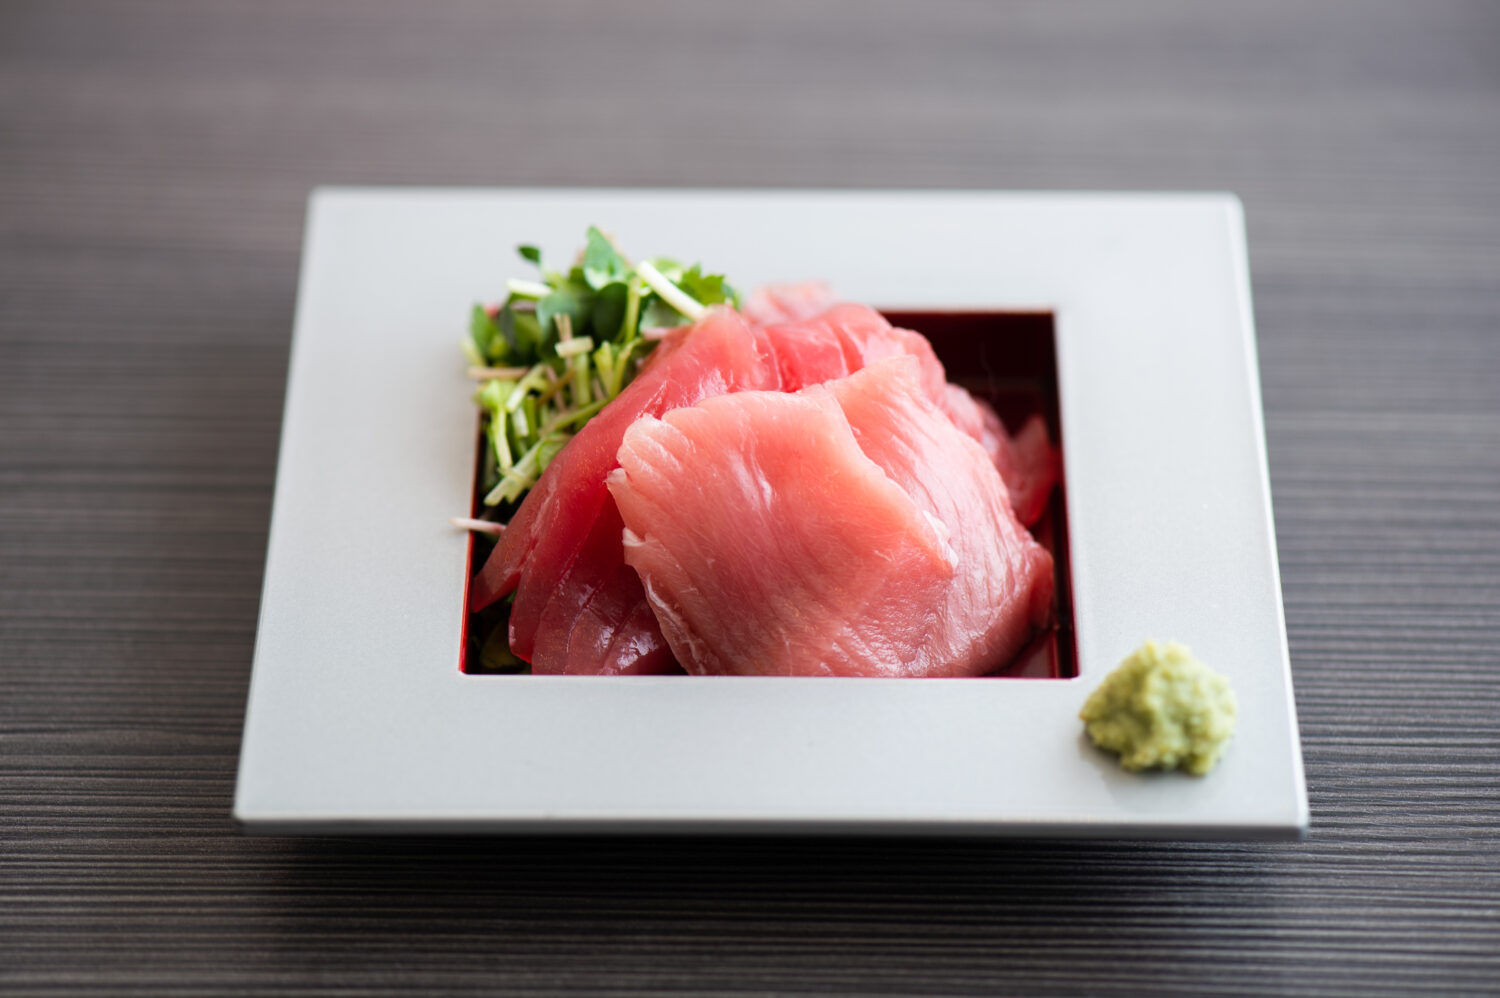 Bluefin Tuna Sashimi　本マグロ刺身　honmaguro sashimi